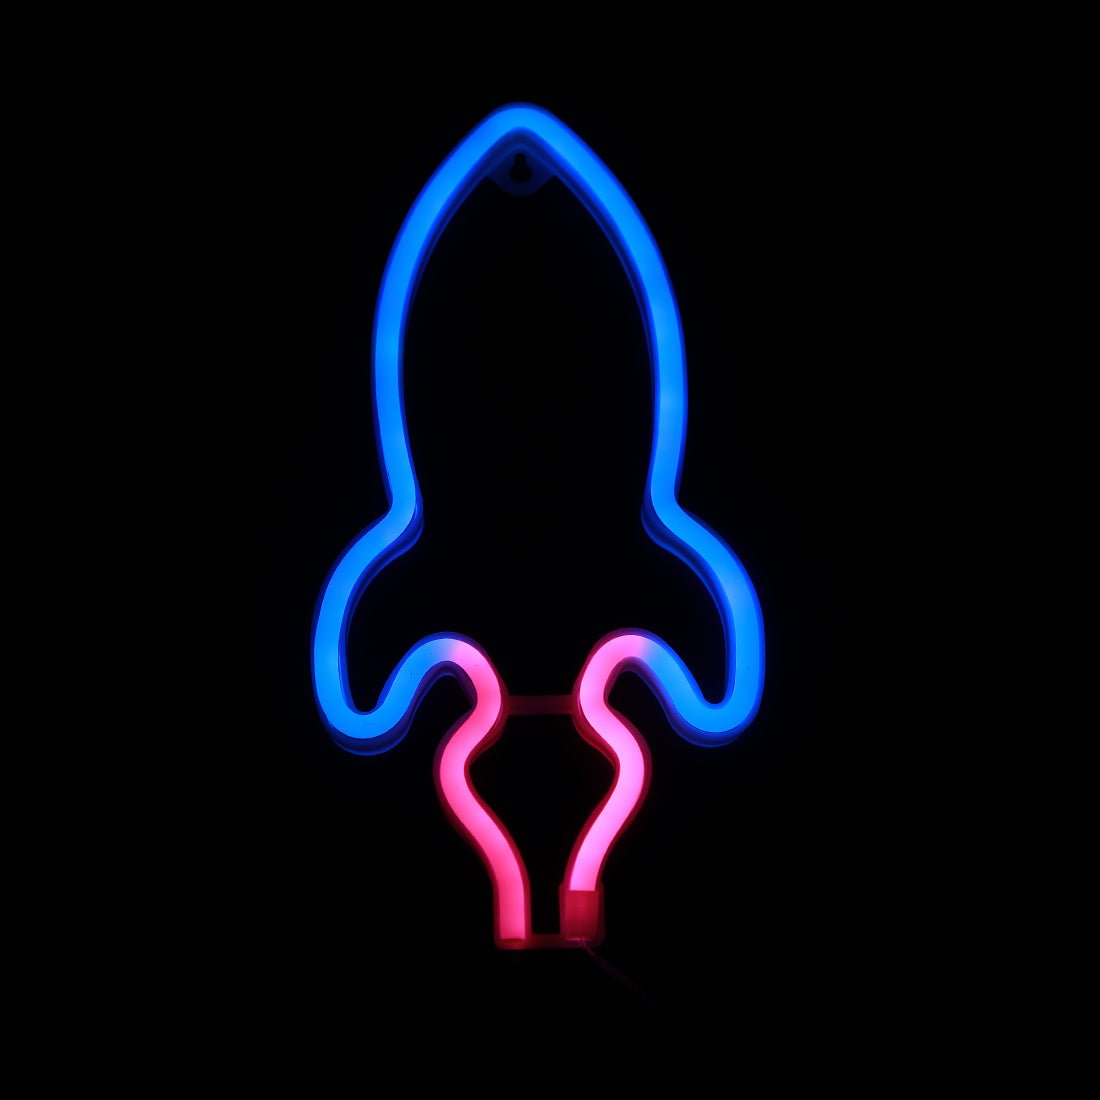 Led Neon Rocket Shape - Blue & Pink - إضاءة - Store 974 | ستور ٩٧٤